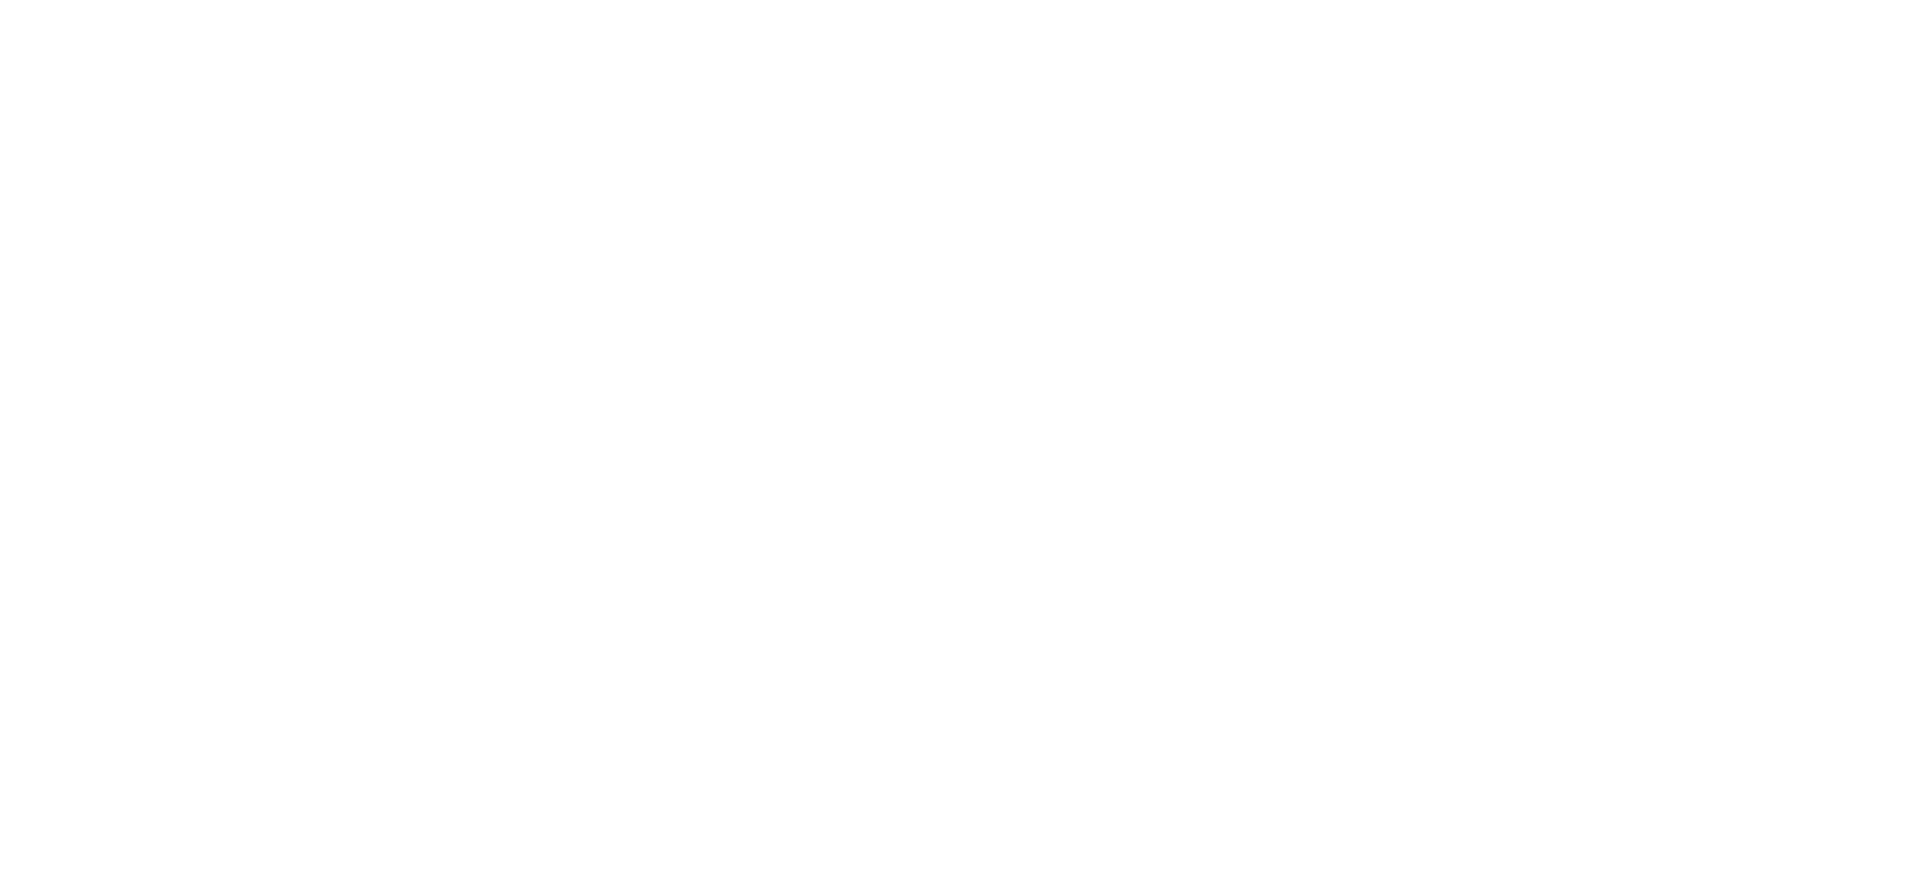 Top Builders white logo